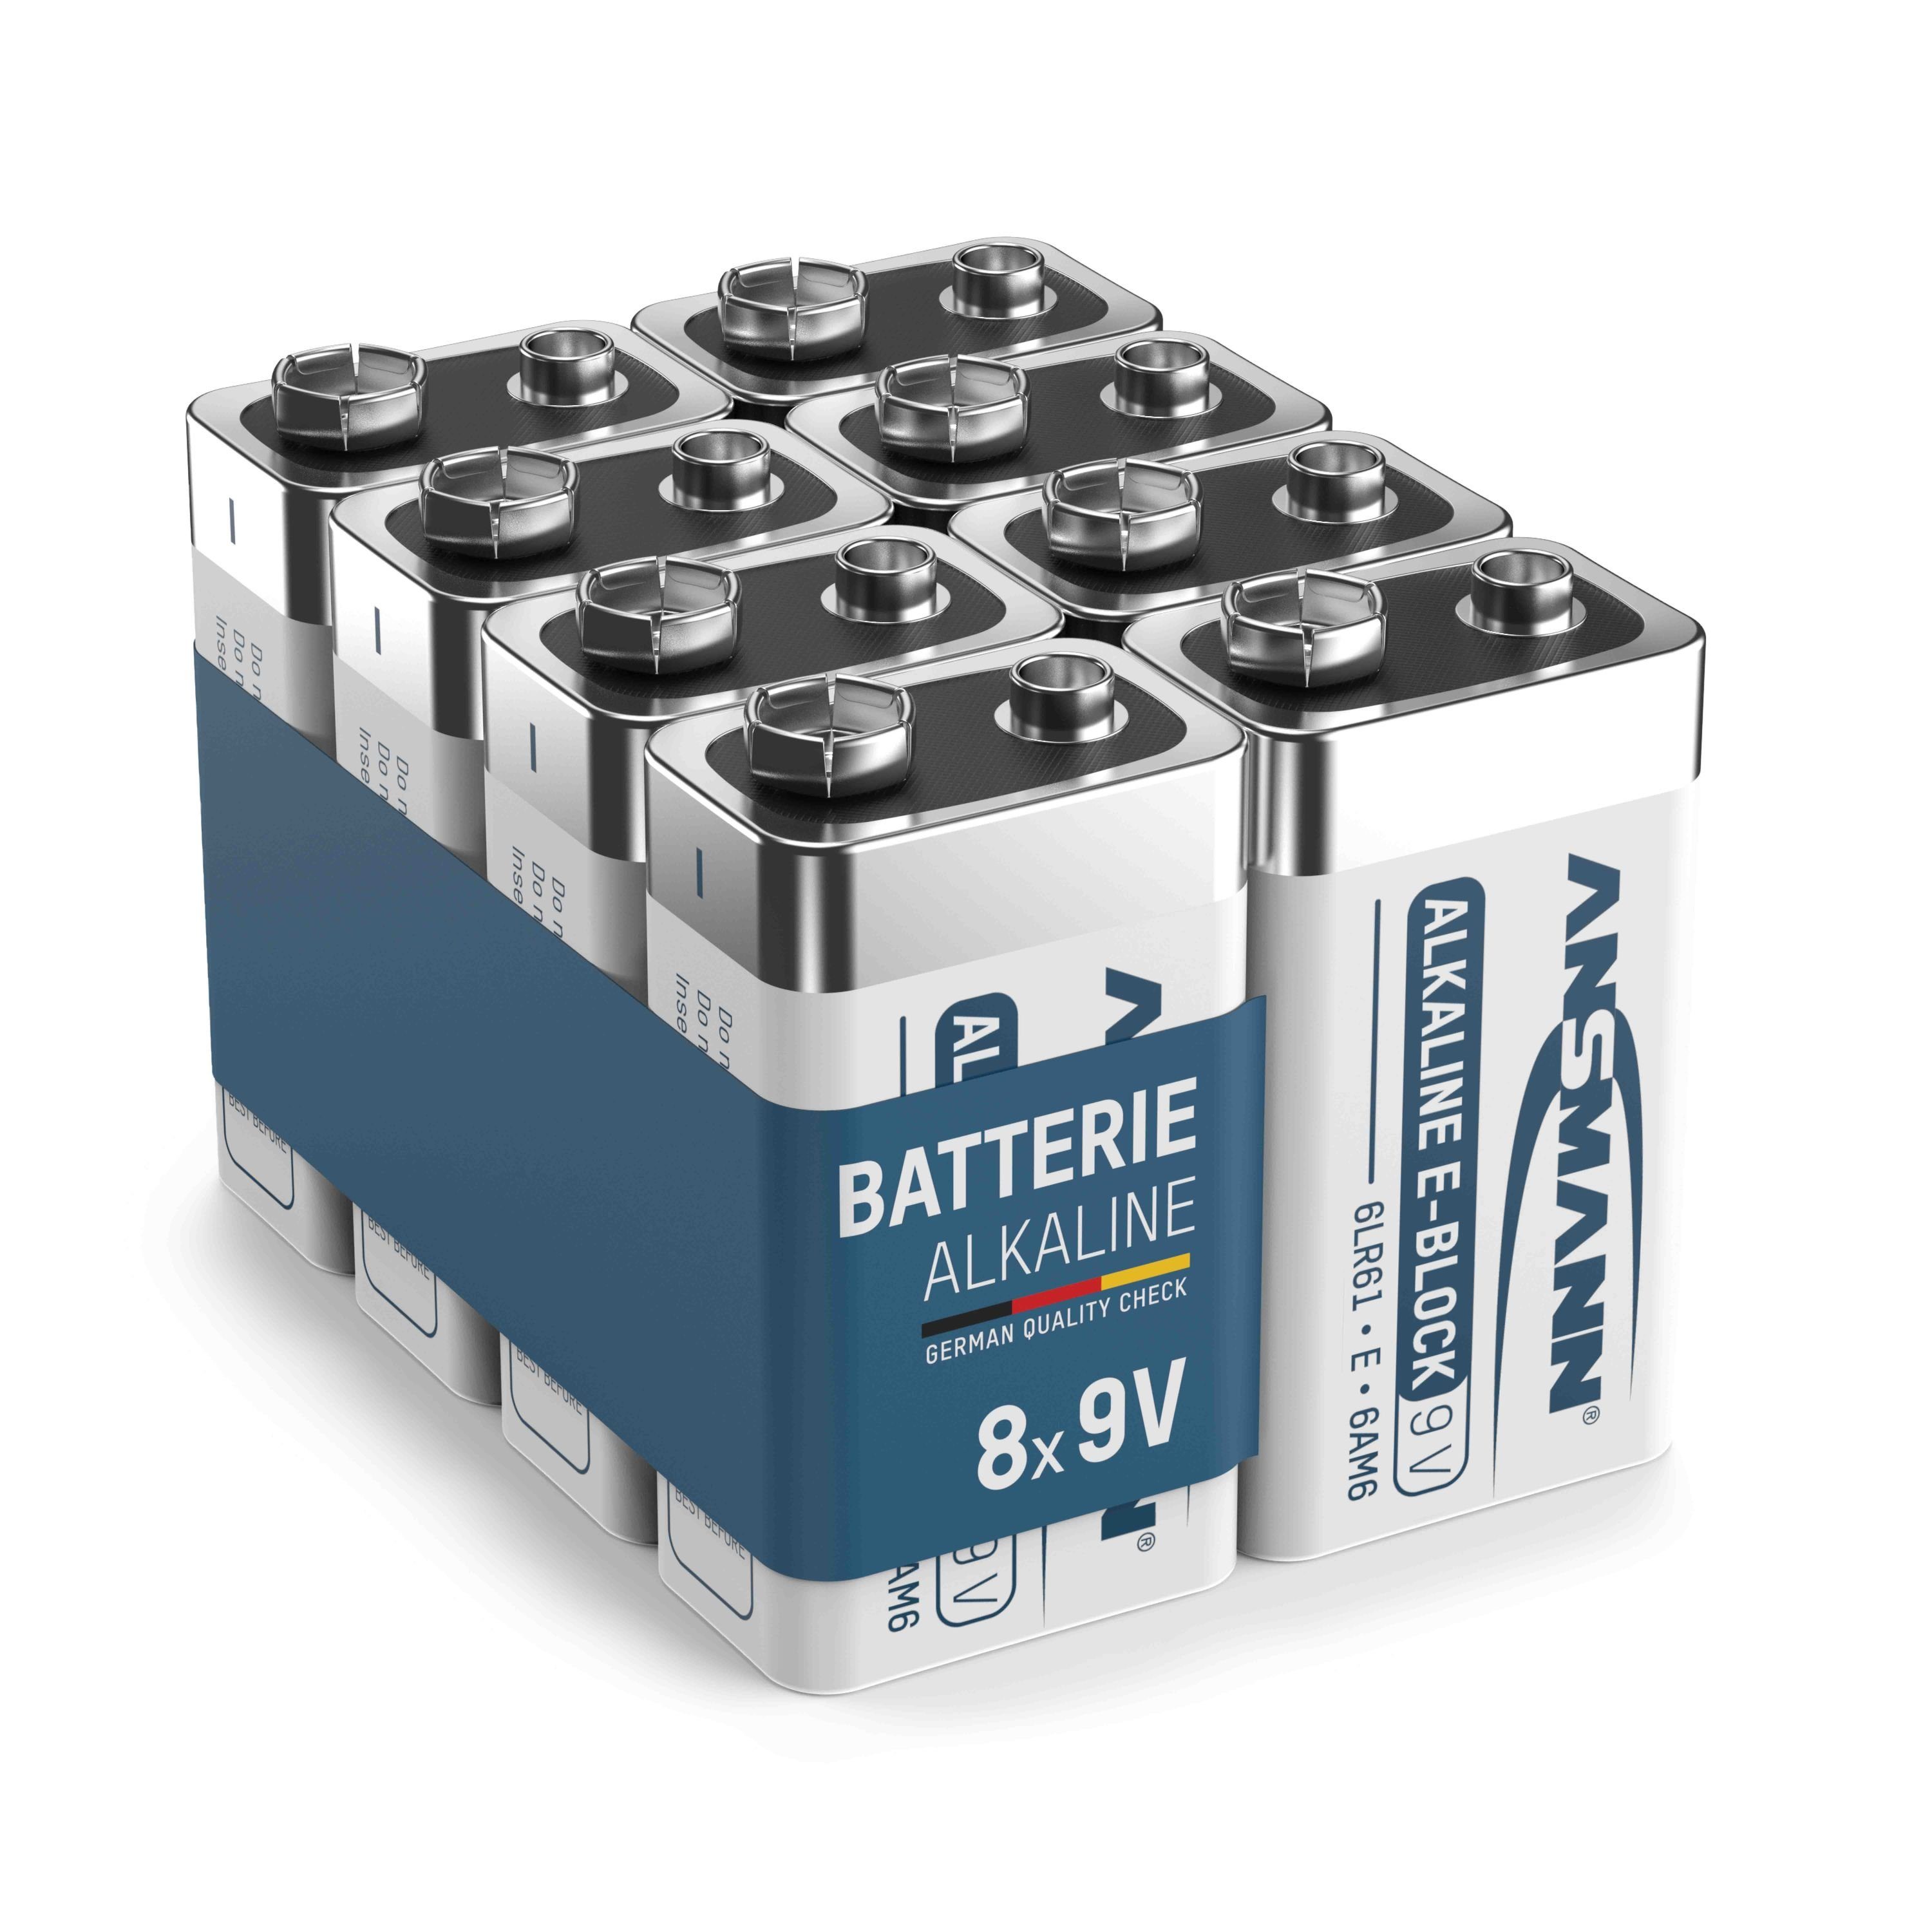 Rauchmelder Alkaline Batterien ideal - longlife Stück) für Batterie ANSMANN® (8 9V Block